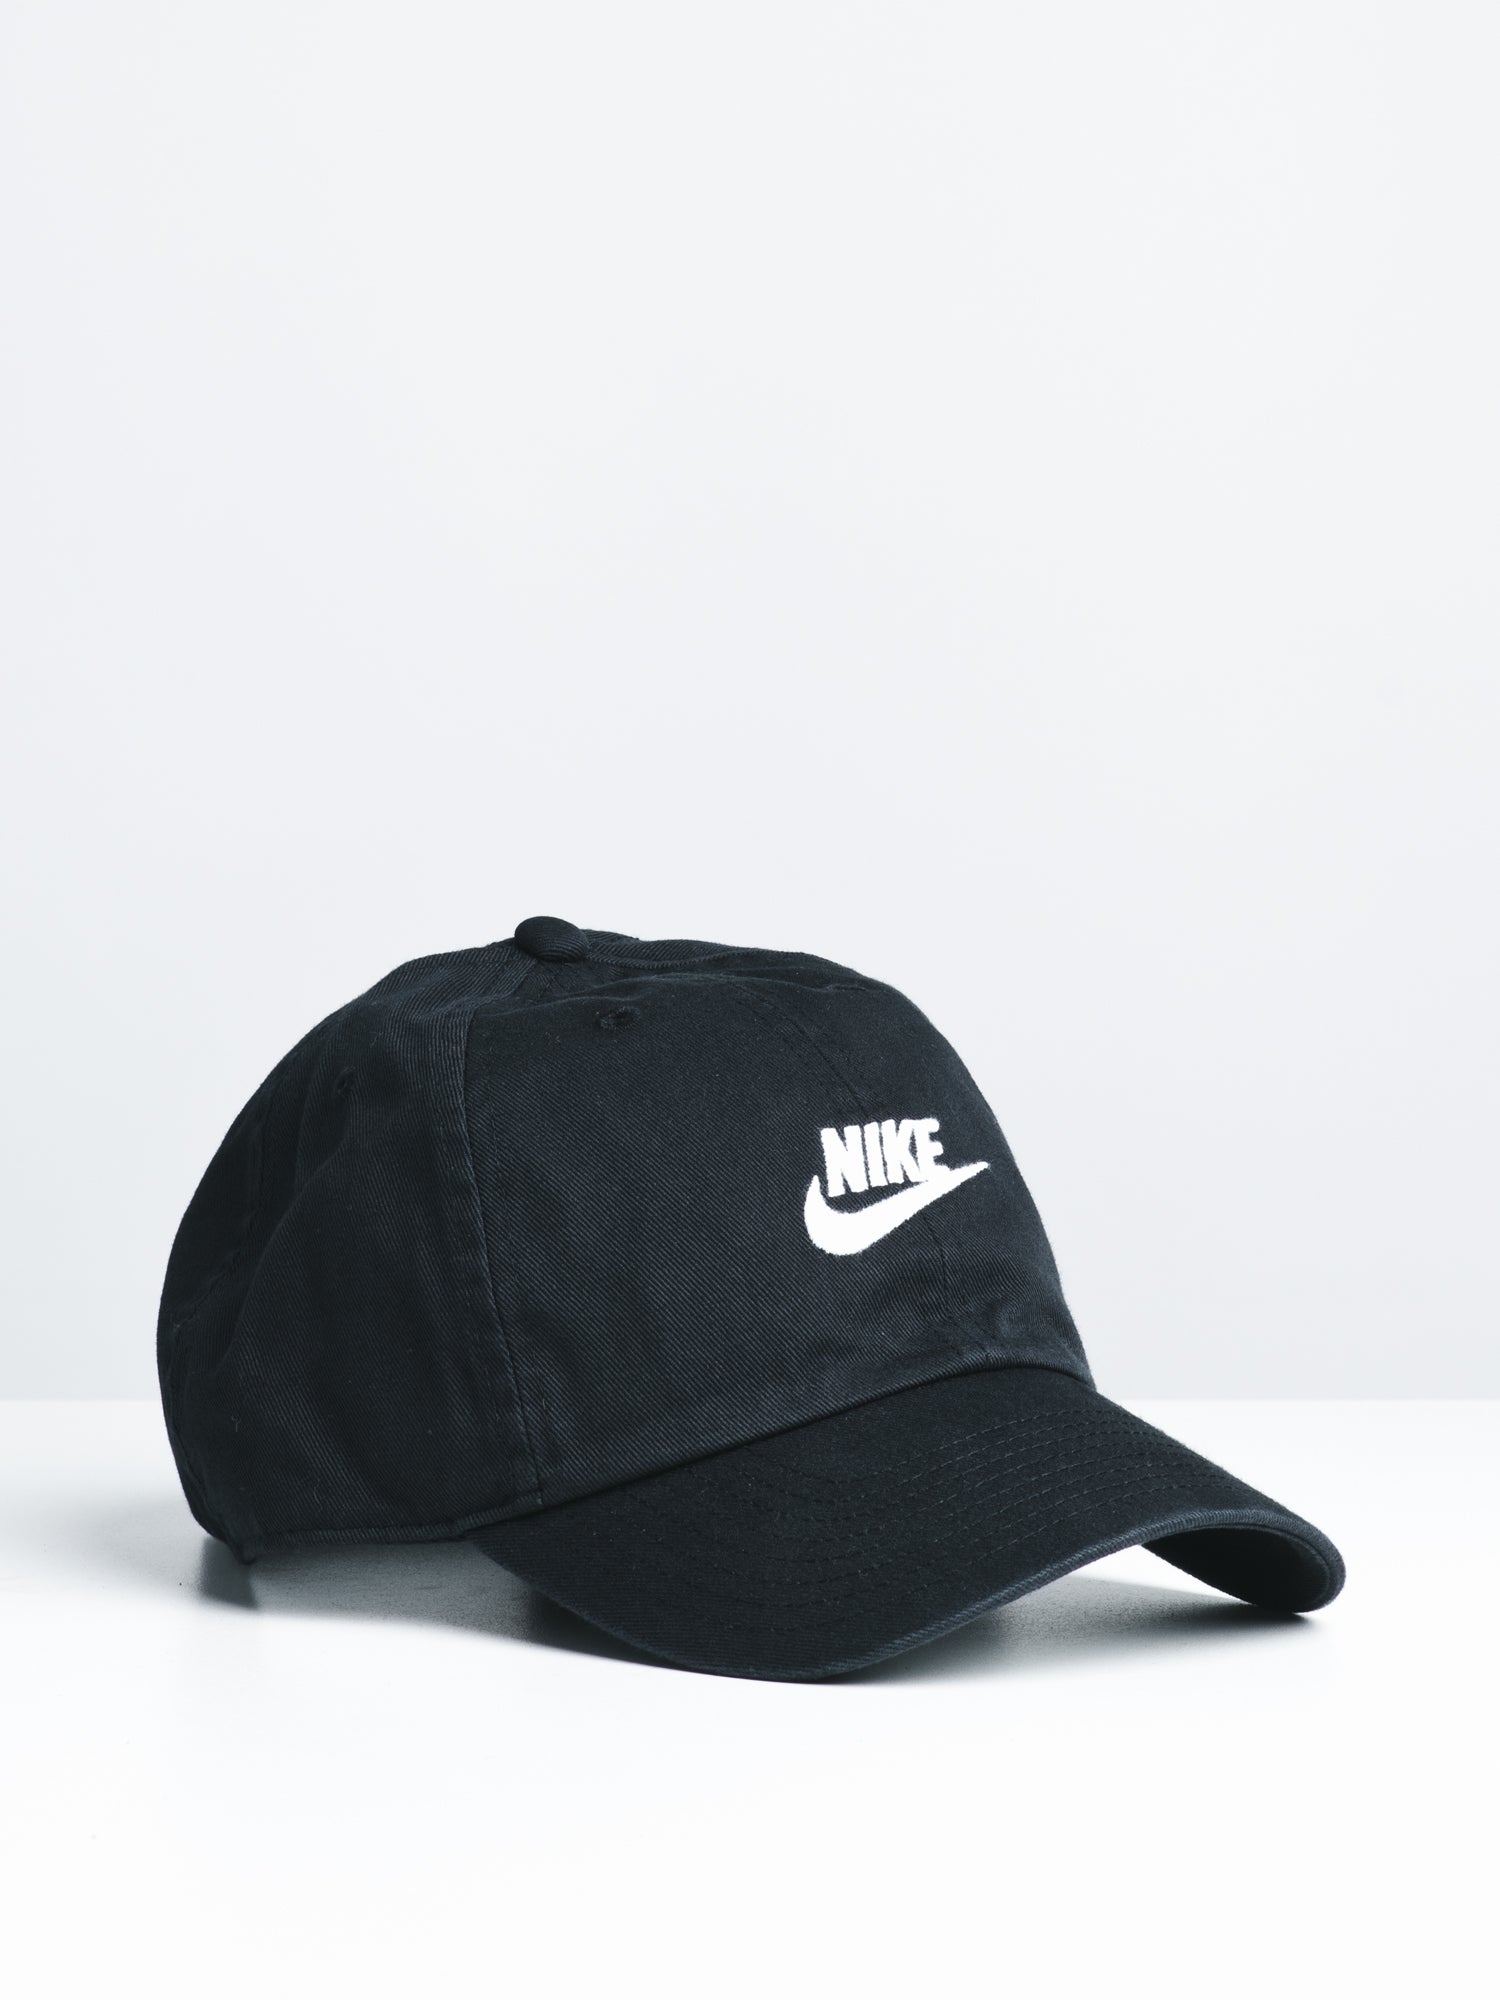 Nike Hats